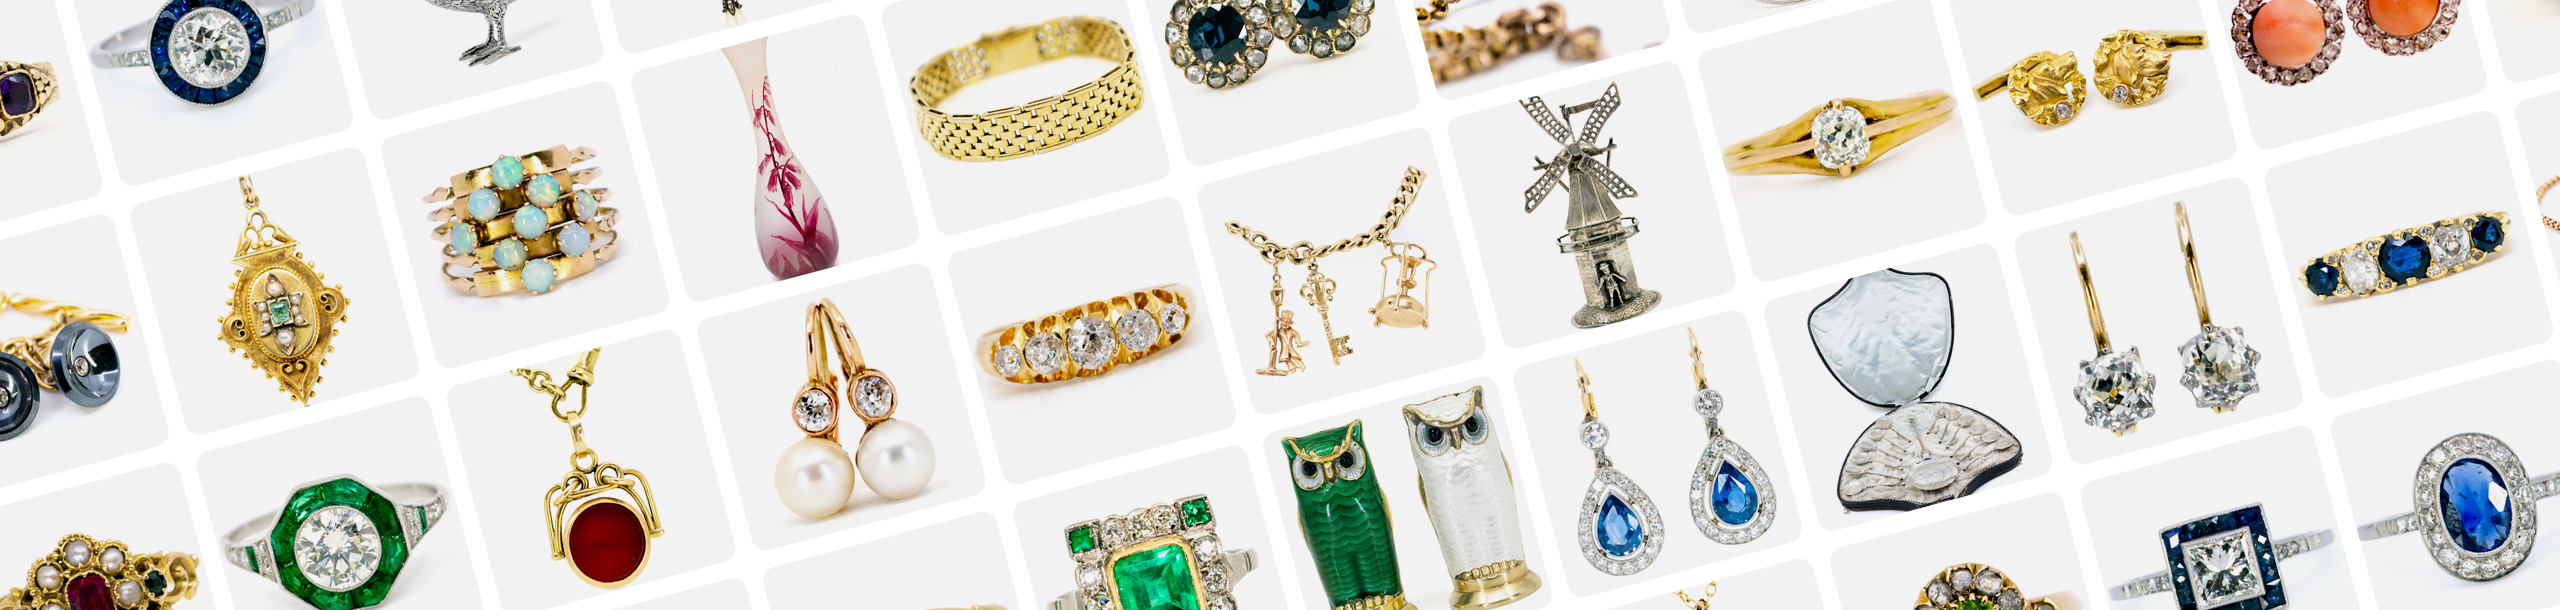 Binenbaum Antiques & Jewelry